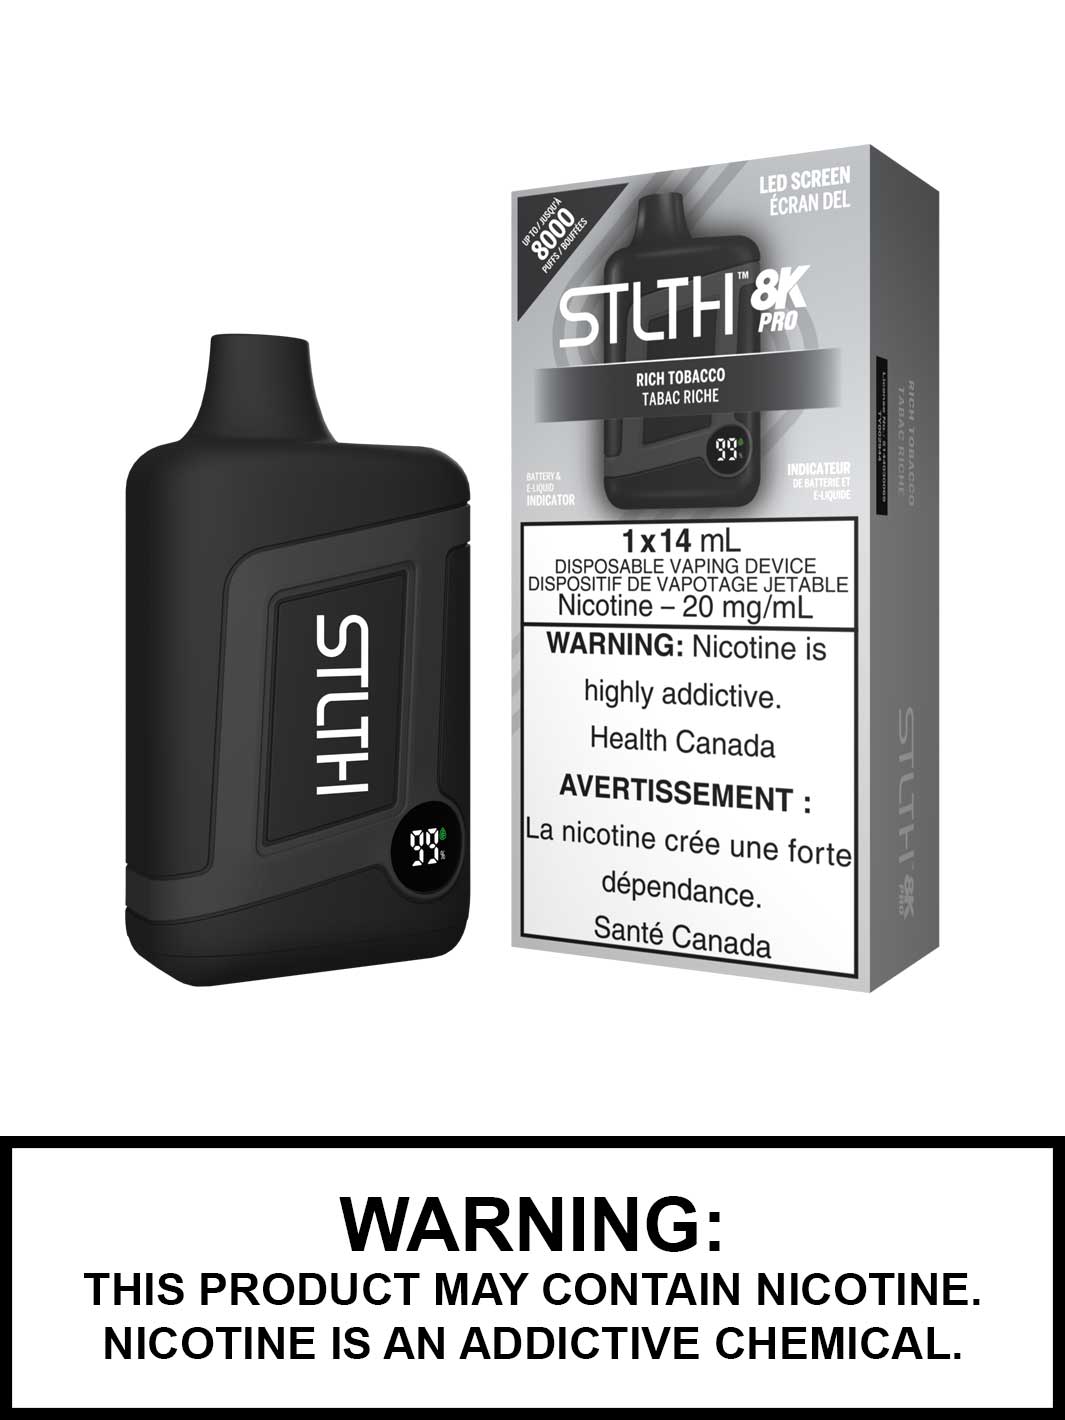 Rich Tobacco STLTH 8K Pro Disposable Vape, STLTH 8000 Pro, Vape360 Canada